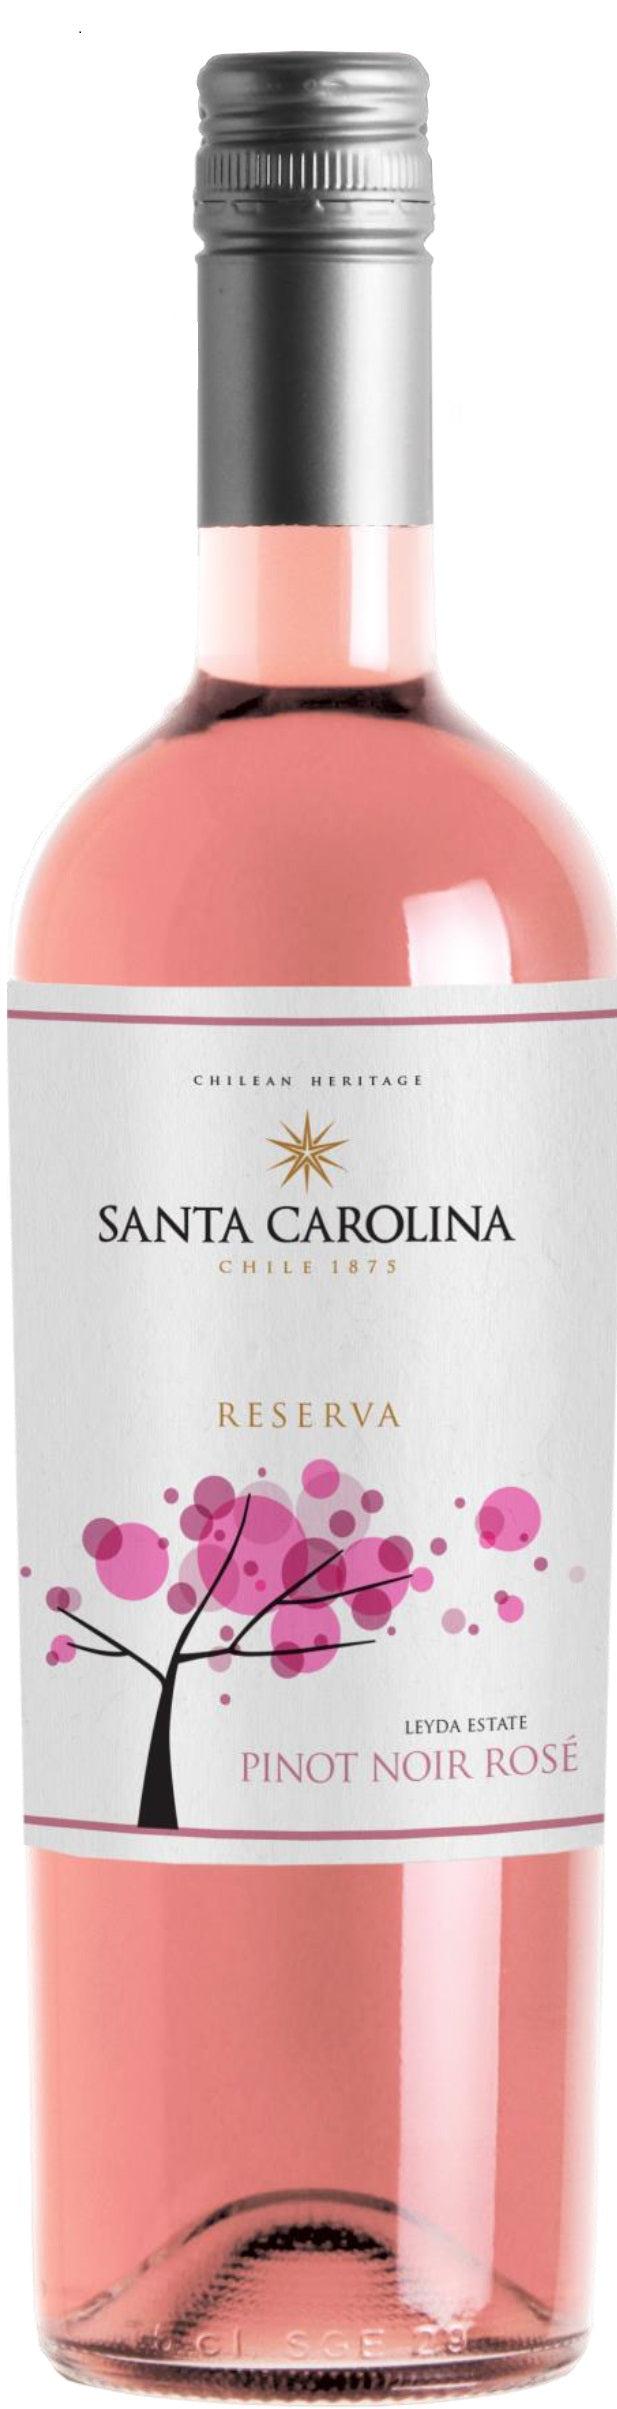 Santa Carolina Pinot Noir Rose Reserva Estate 2017